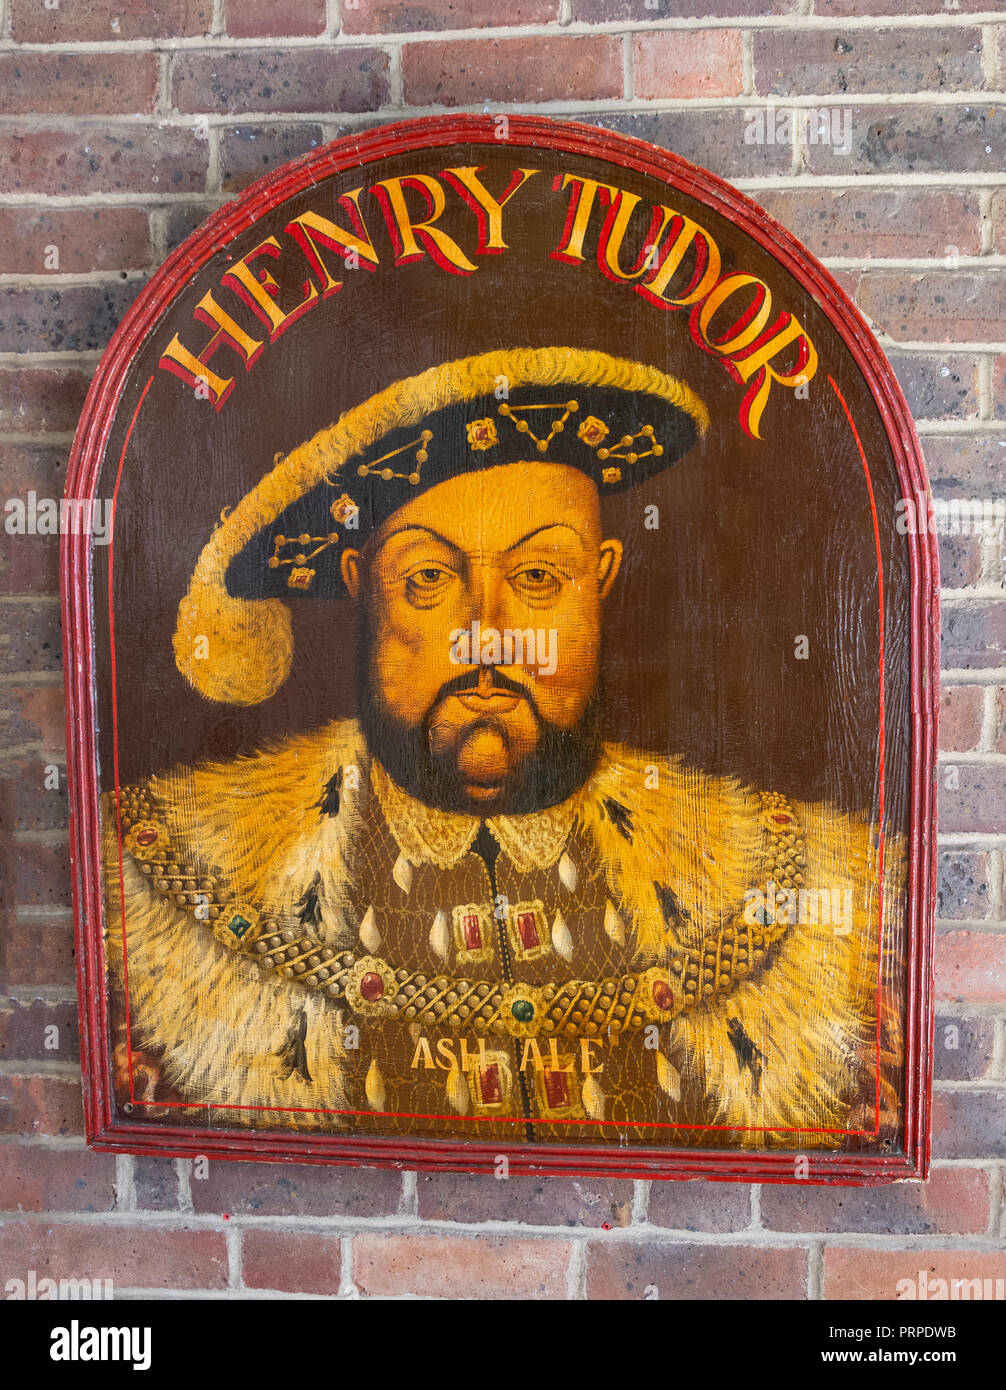 Henry Tutor pub firmar en el Museo Midhurst Knockhundred Mews, Midhurst, West Sussex, Inglaterra, Reino Unido Foto de stock